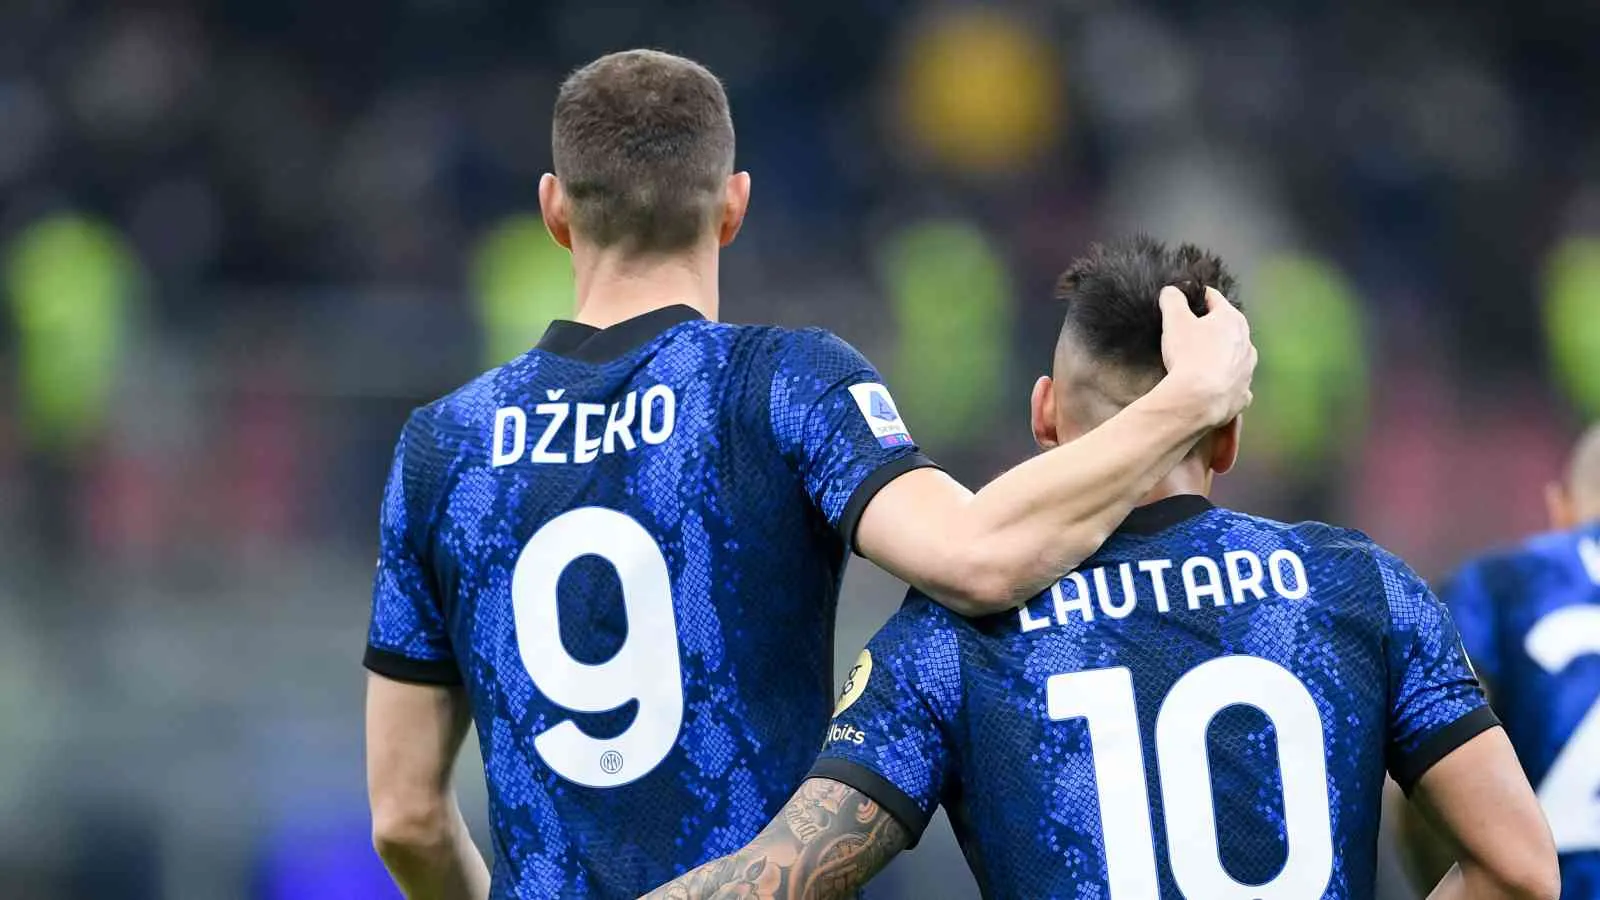 Dzeko Or Lautaro To Start Alongside Lukaku In Inter Milan Vs Udinese Serie A Clash